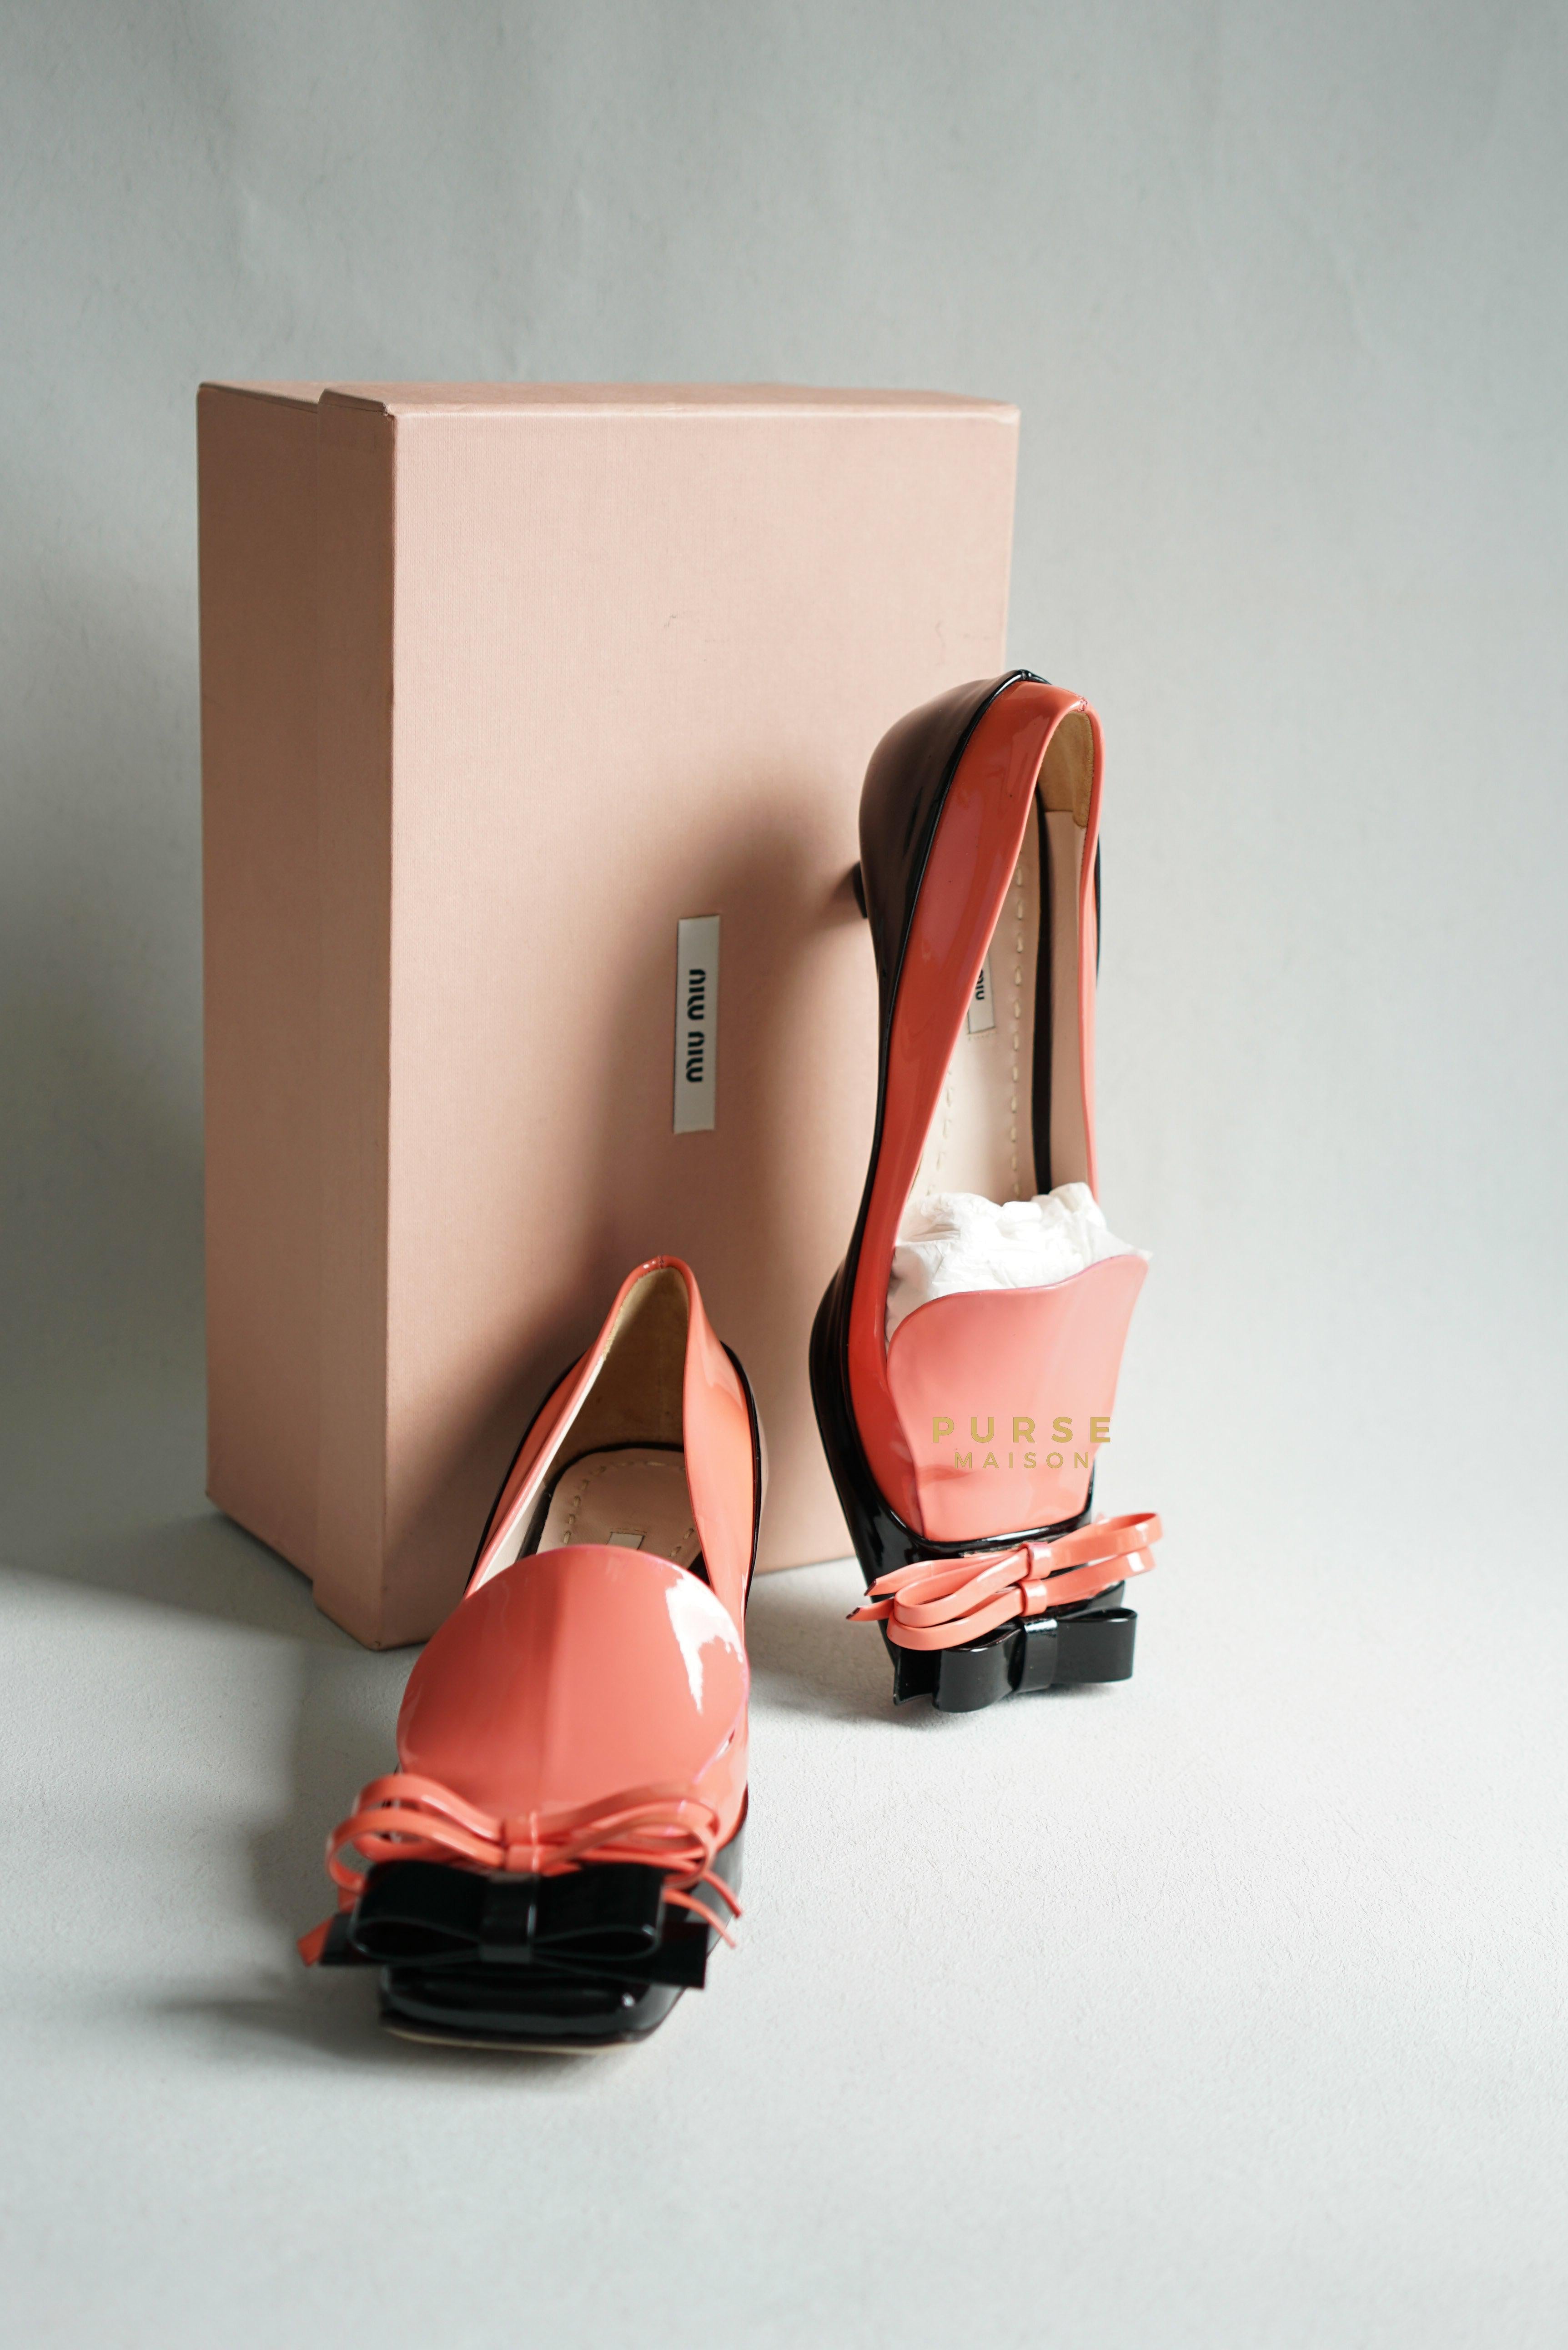 Miu Miu Double Bow Black/Pink Patent Leather Heels Size 36 | Purse Maison Luxury Bags Shop